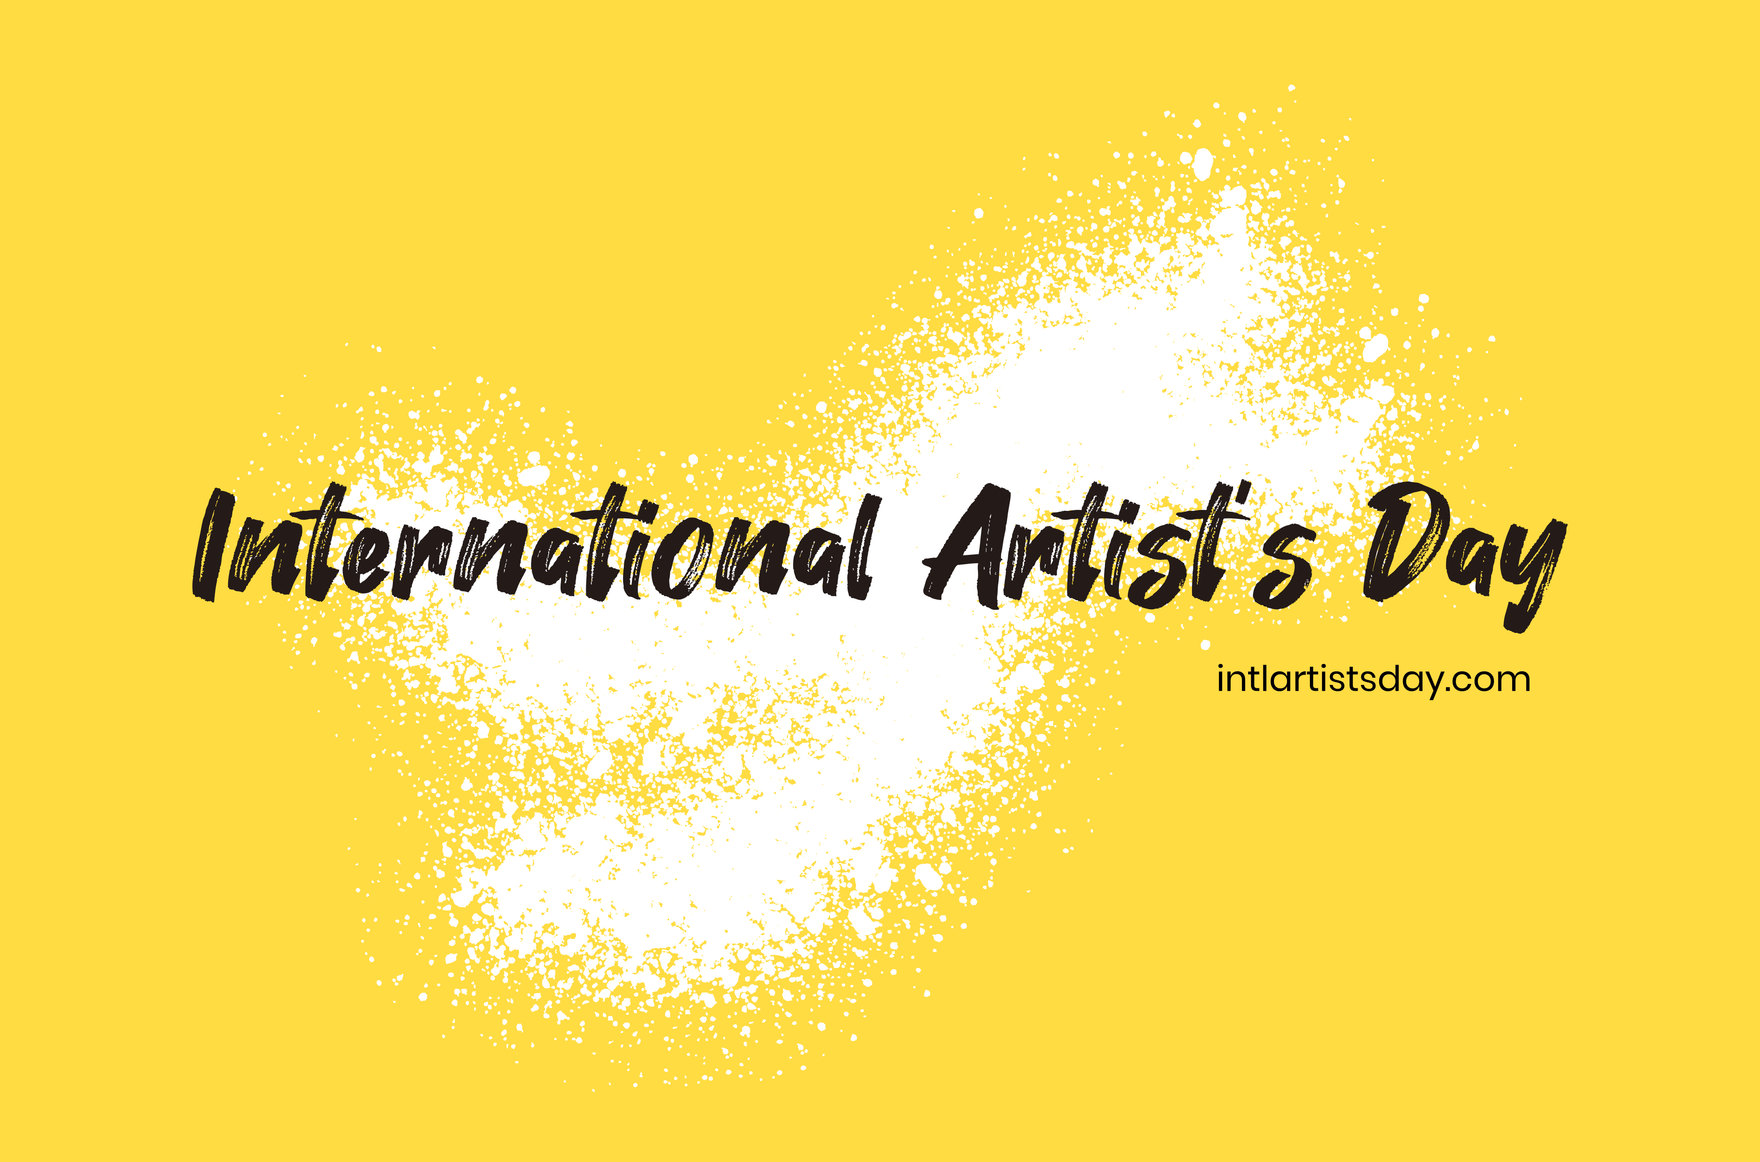 Free International Artist’s Day Website Banner in Illustrator, PSD, EPS, SVG, JPG, PNG